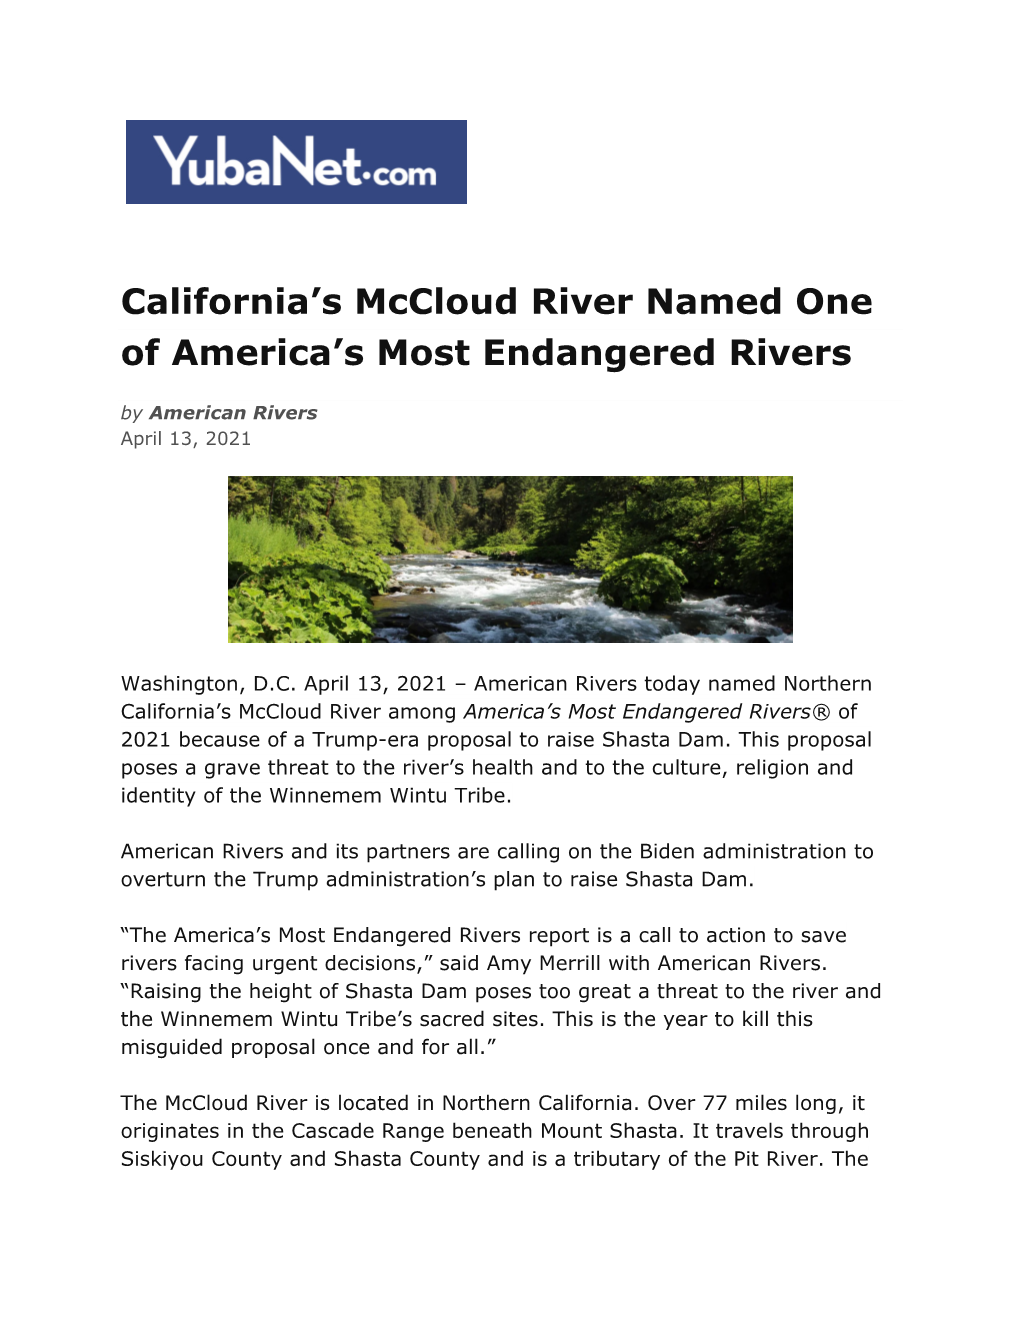 California's Mccloud River Named One Of